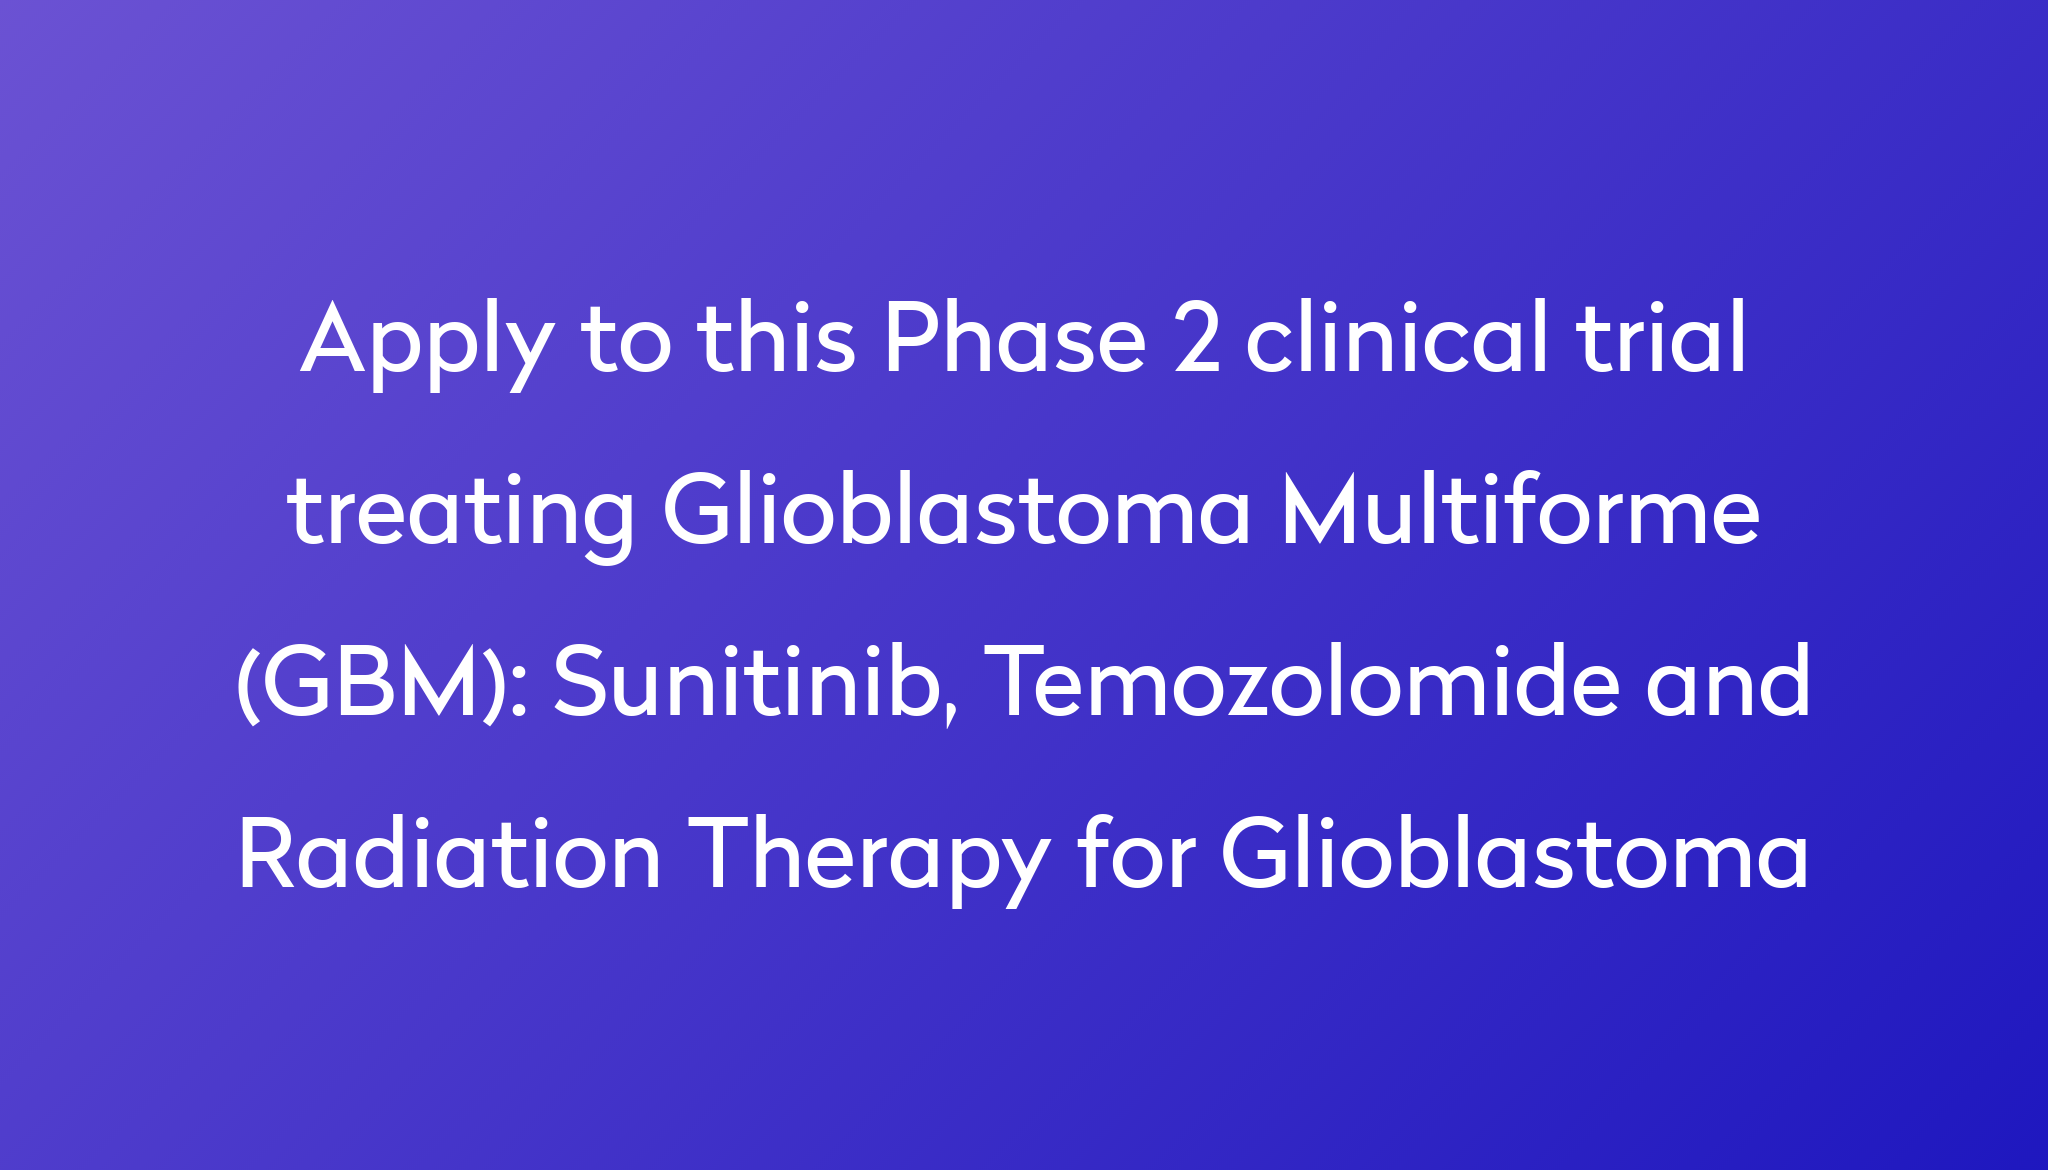 Sunitinib, Temozolomide and Radiation Therapy for Glioblastoma Clinical